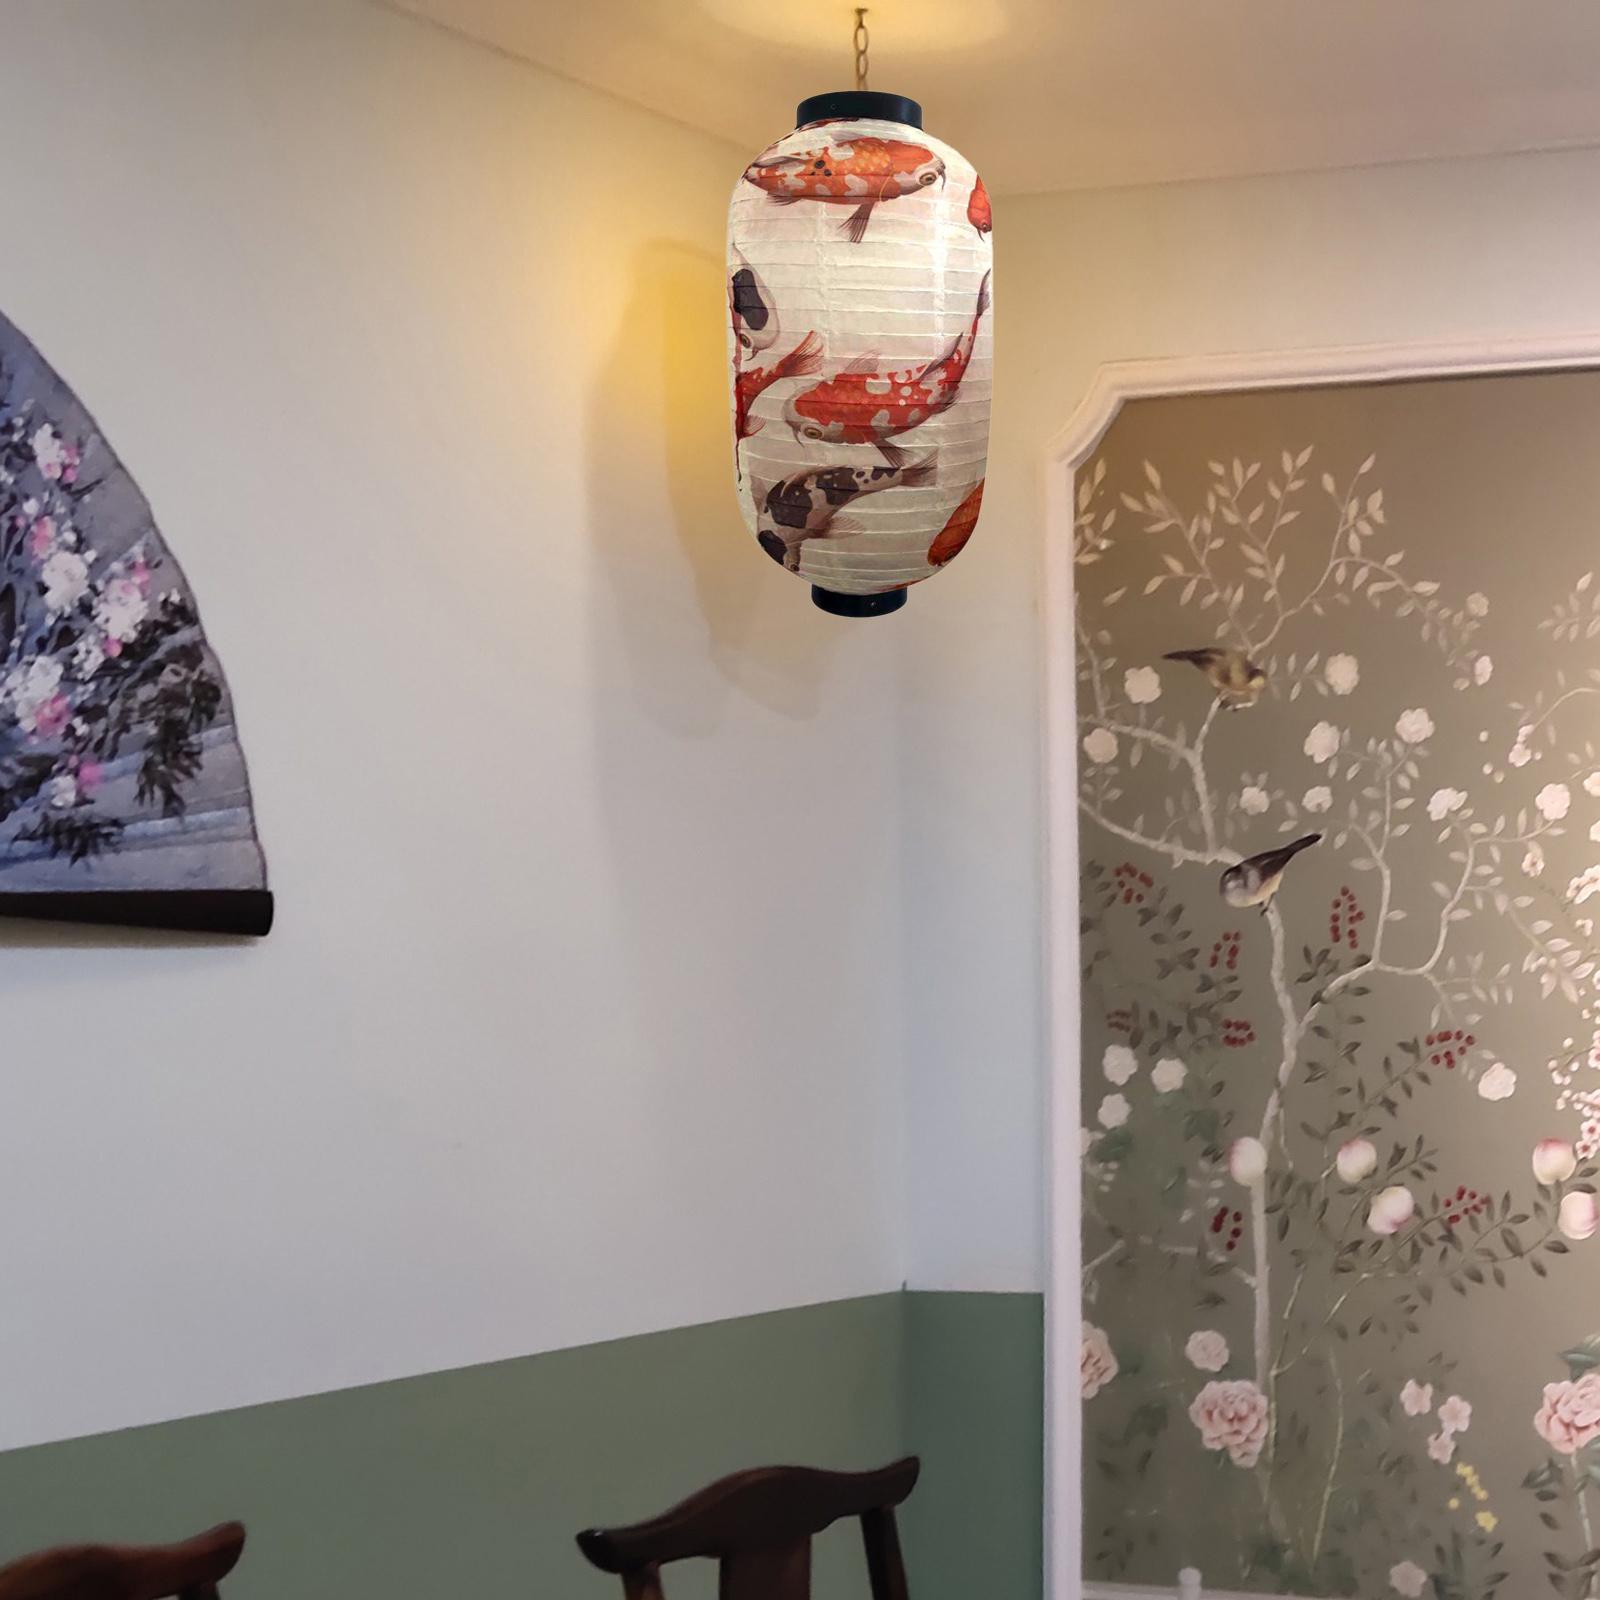 Lzakaya Restaurant Sign Lantern Japanese Bar Decorative Sushi Ramen Decor White 20x35cm